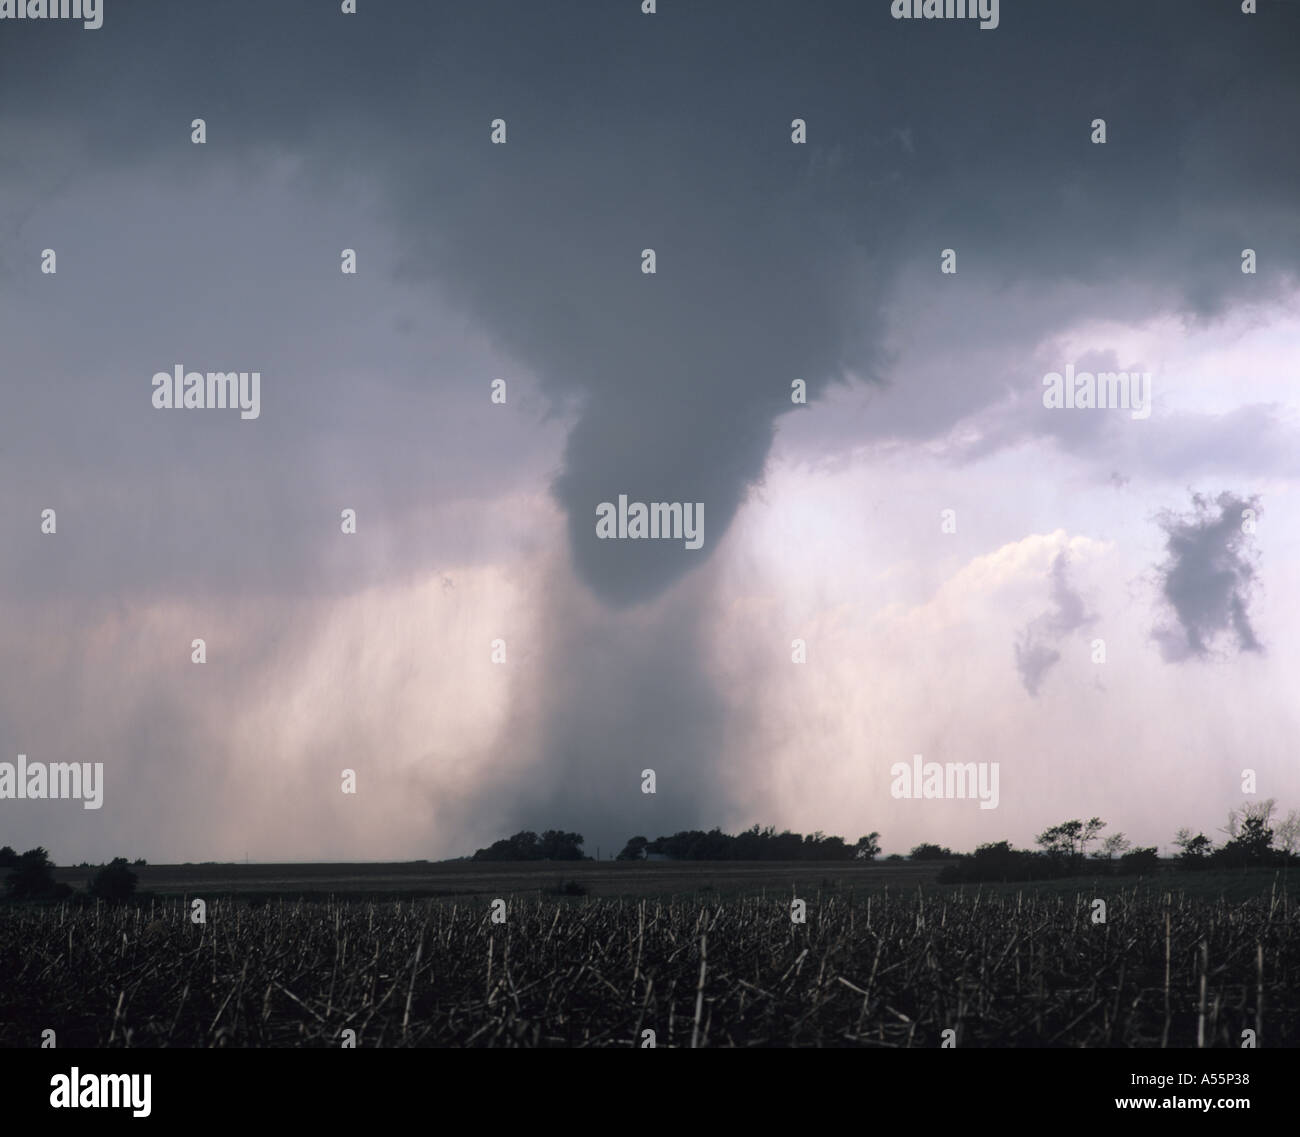 A large black dusty tornado touches down over farmland in Nebraska, USA Stock Photo